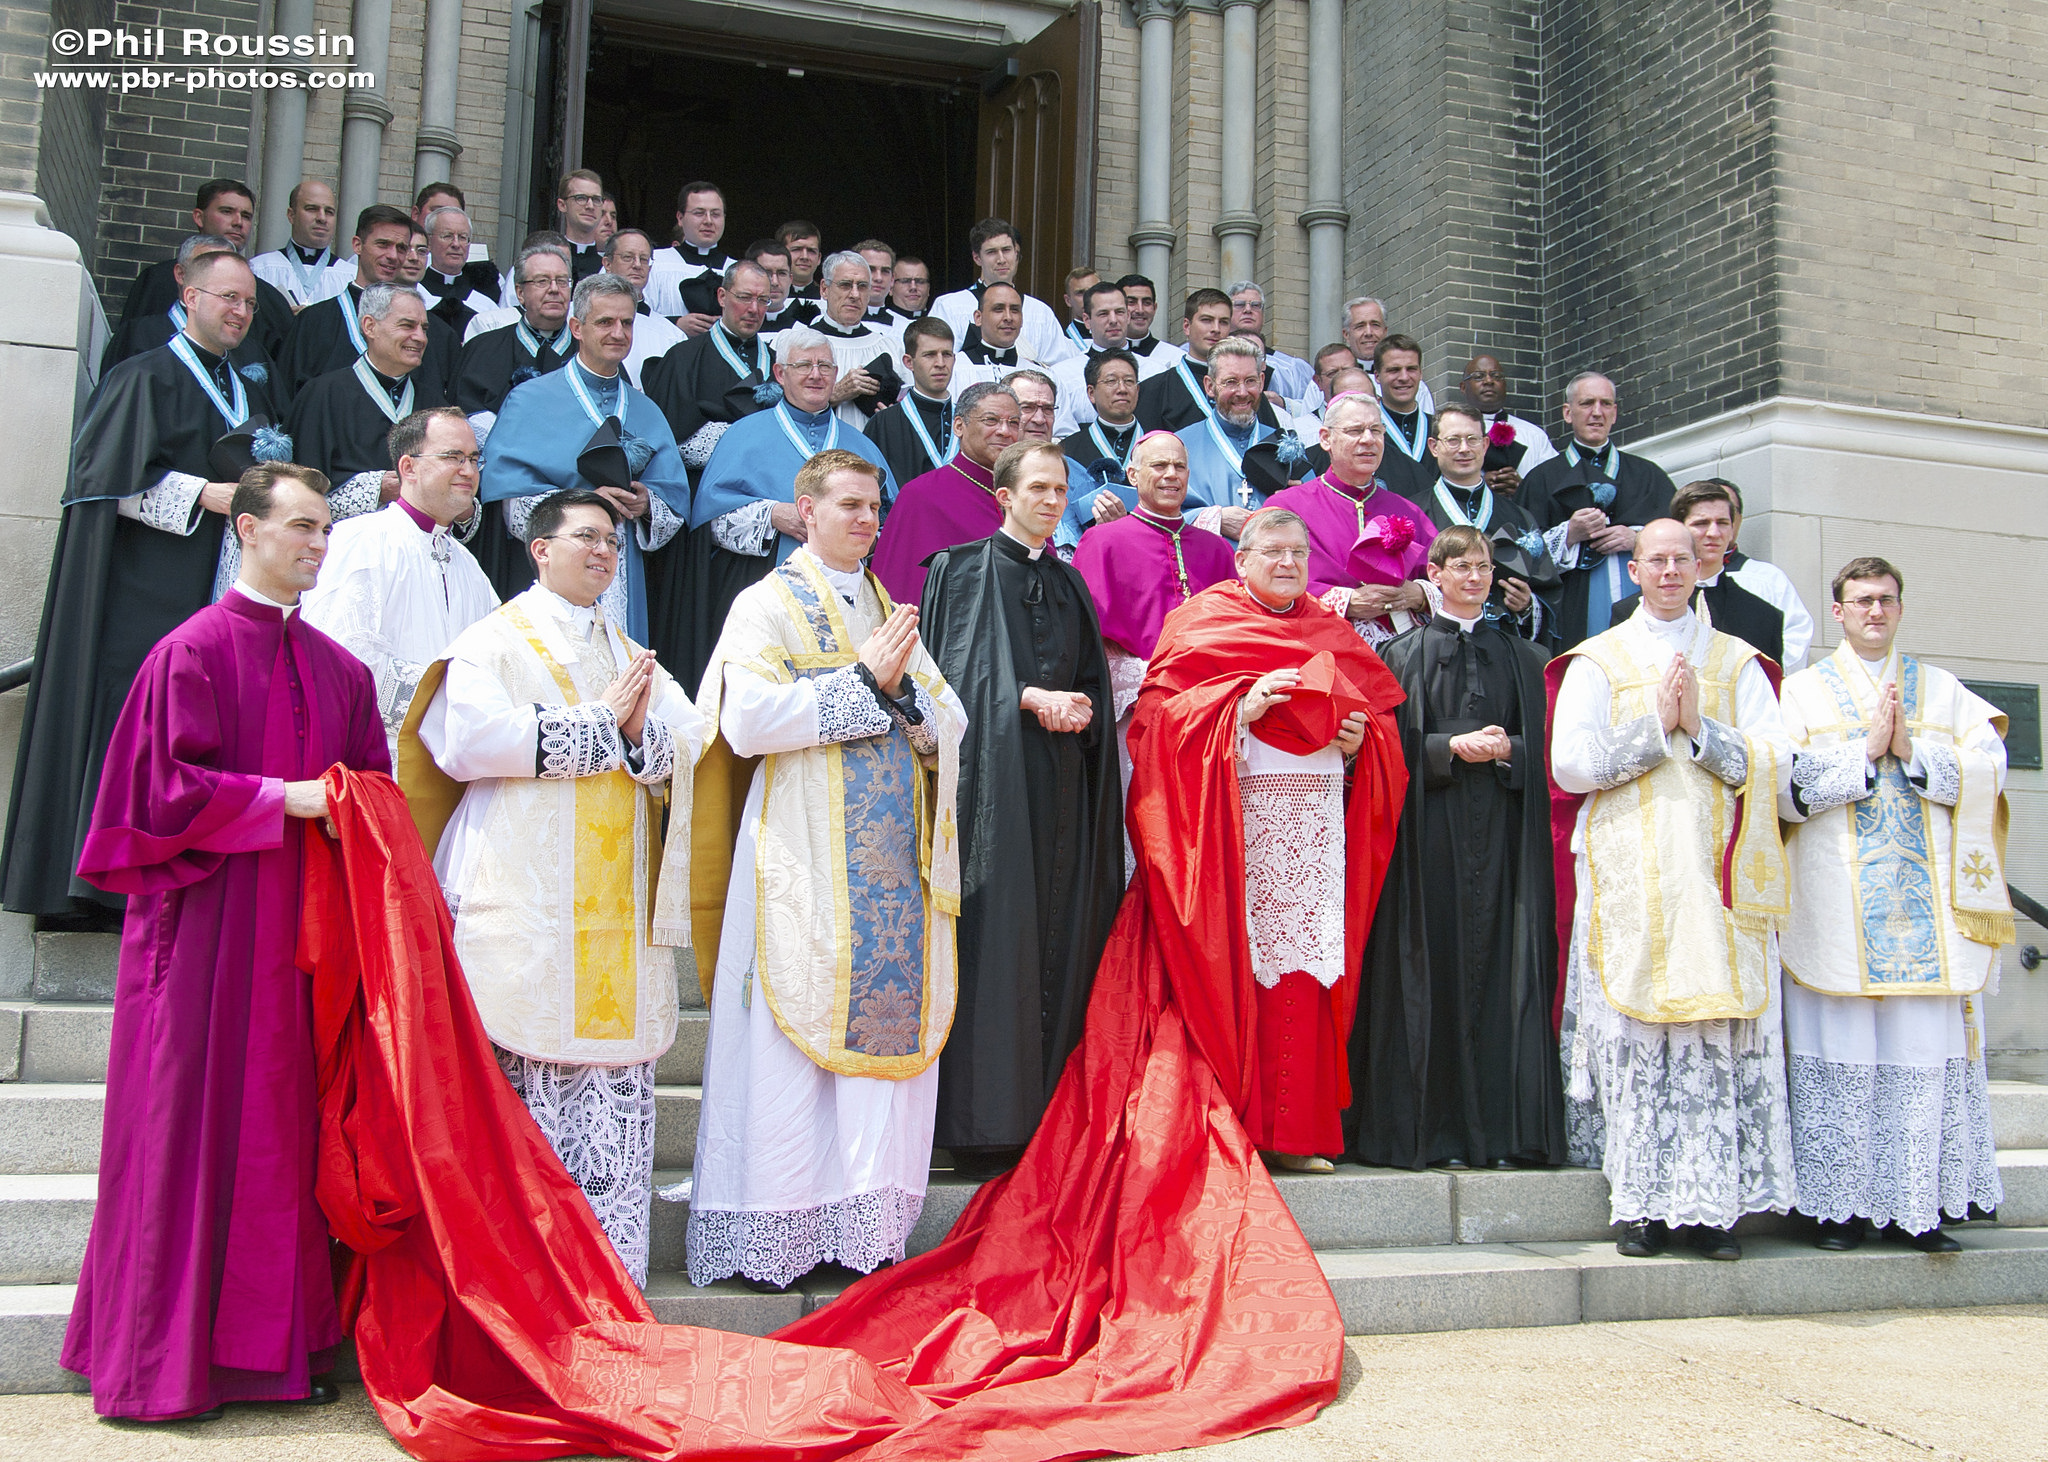 American-Ordination-Group-Photo-Phil-Roussin.jpg